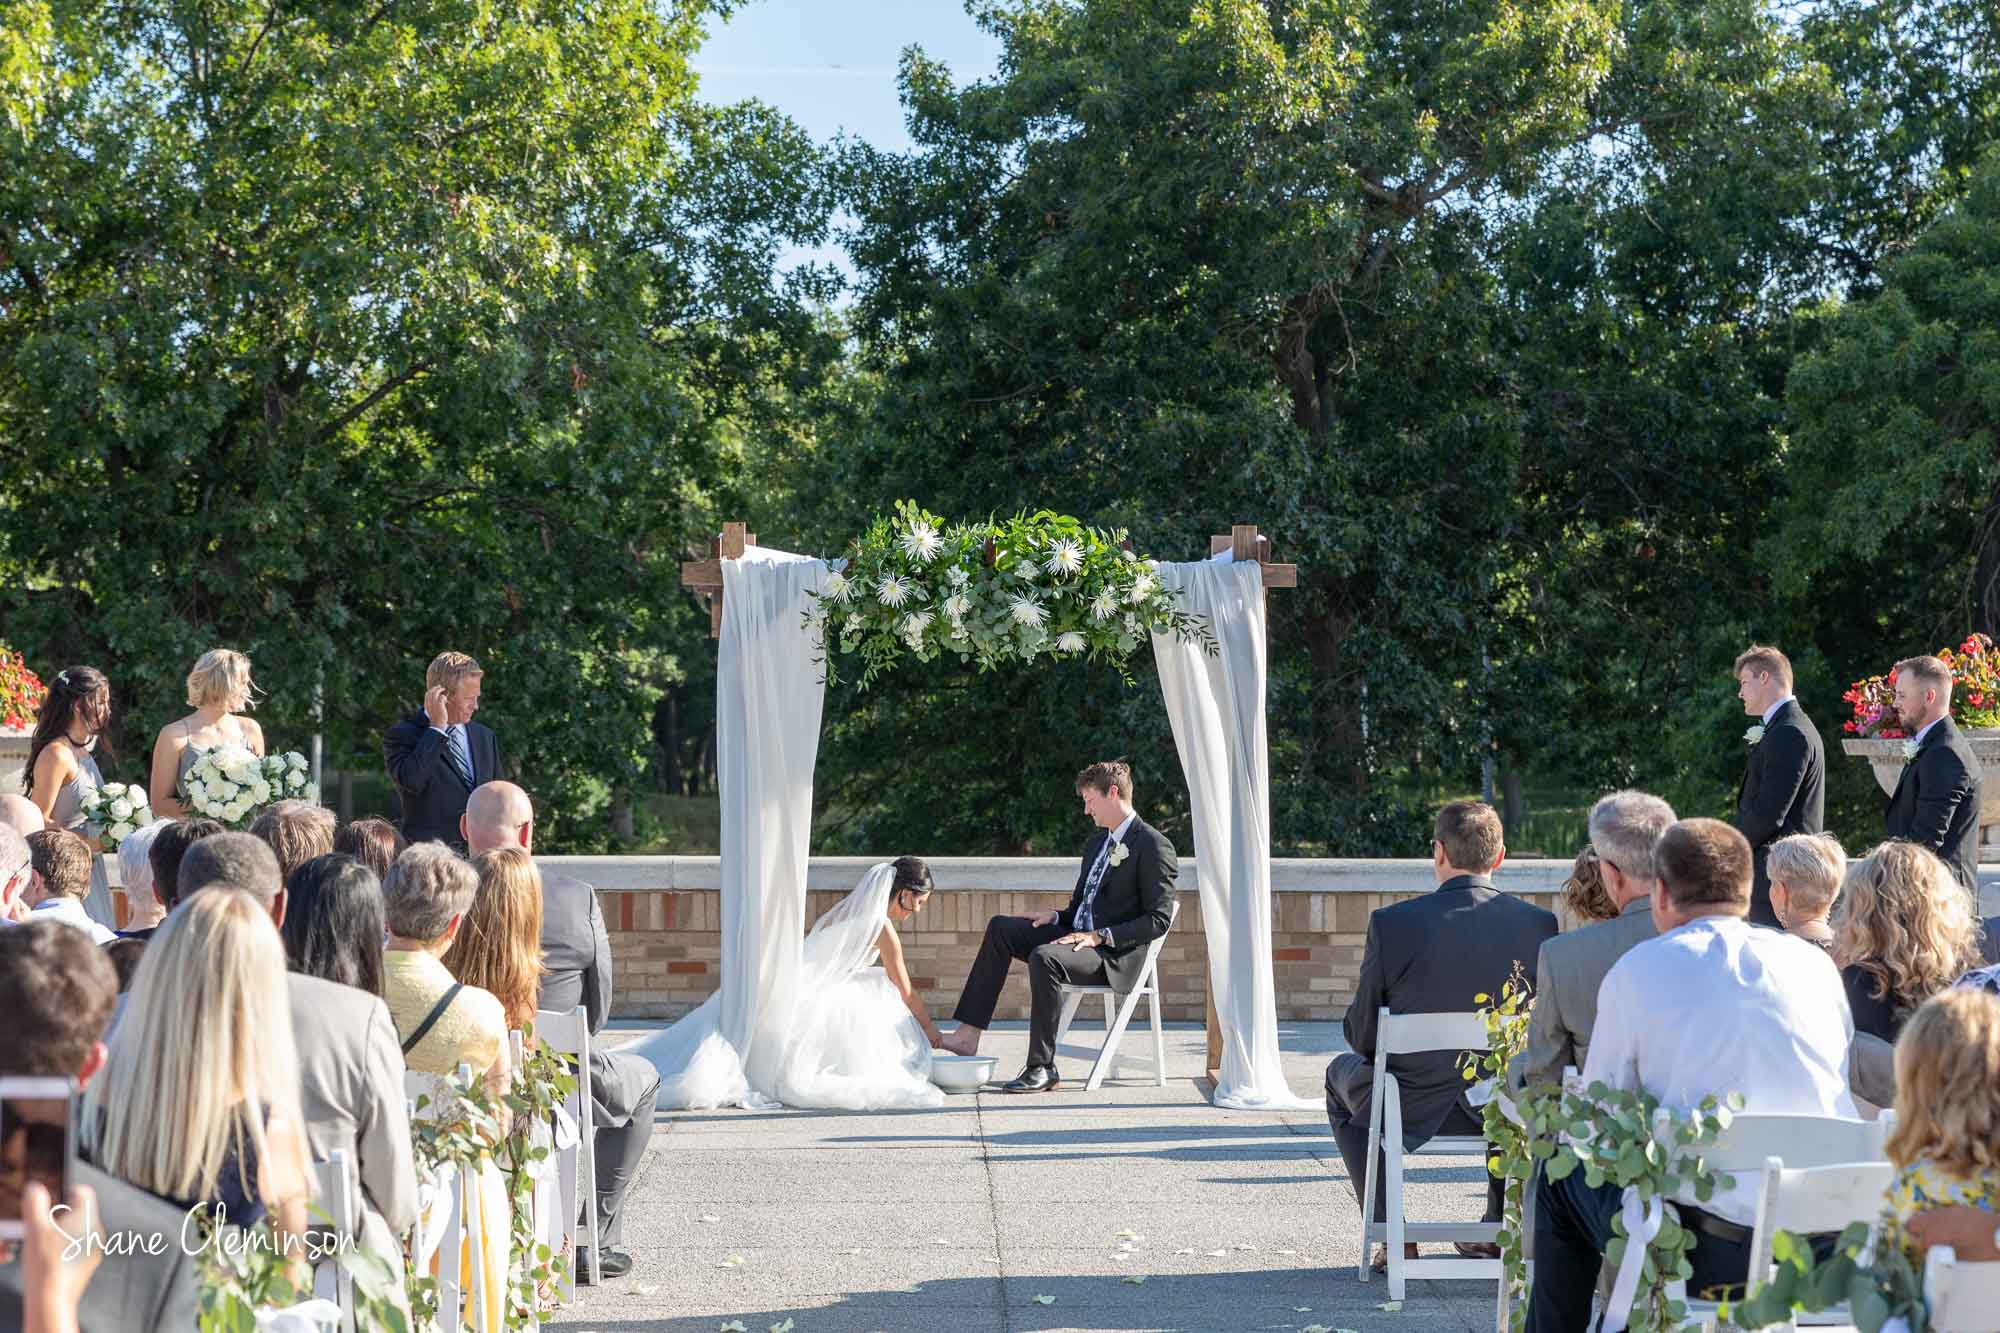 Marquette Park Pavilion Wedding by Shane Cleminson Photography